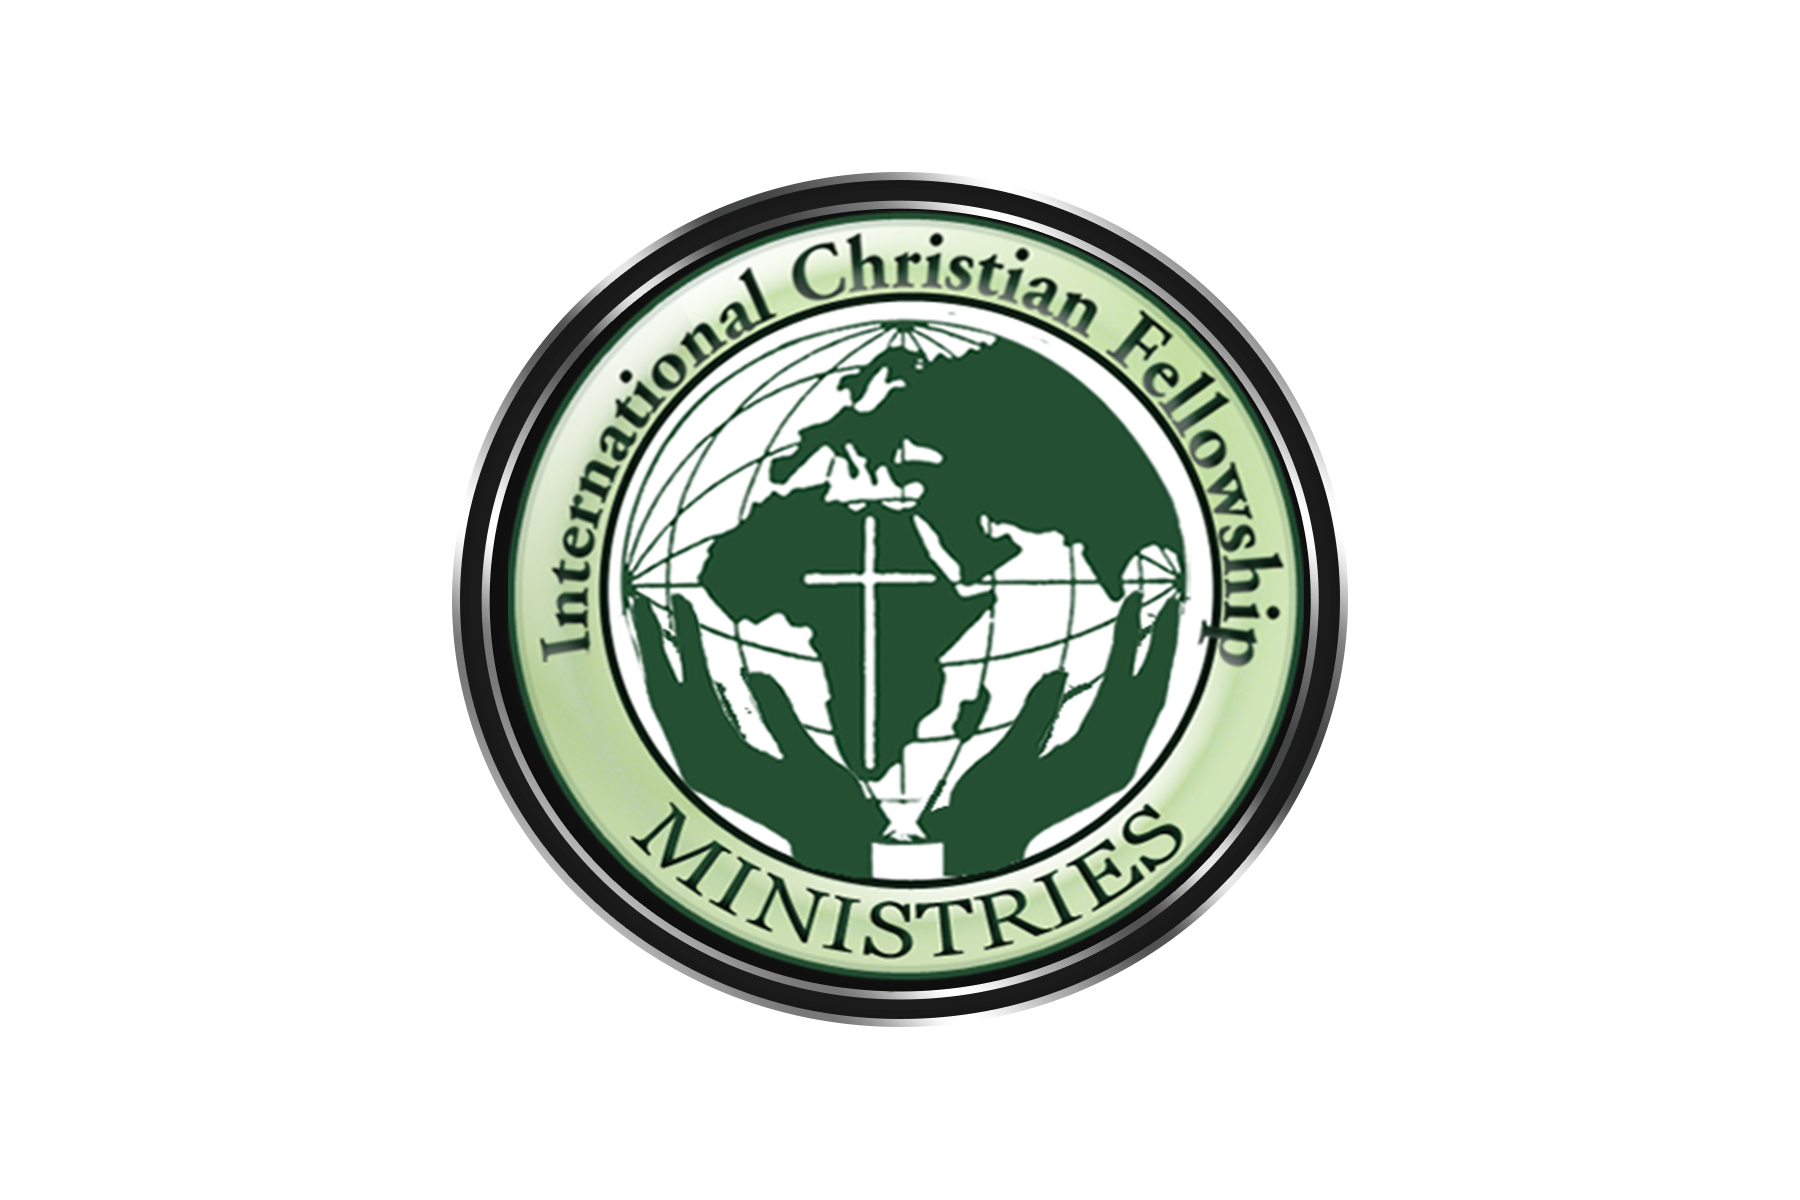 INTERNATIONAL CHRISTAIN FELLOWSHIP